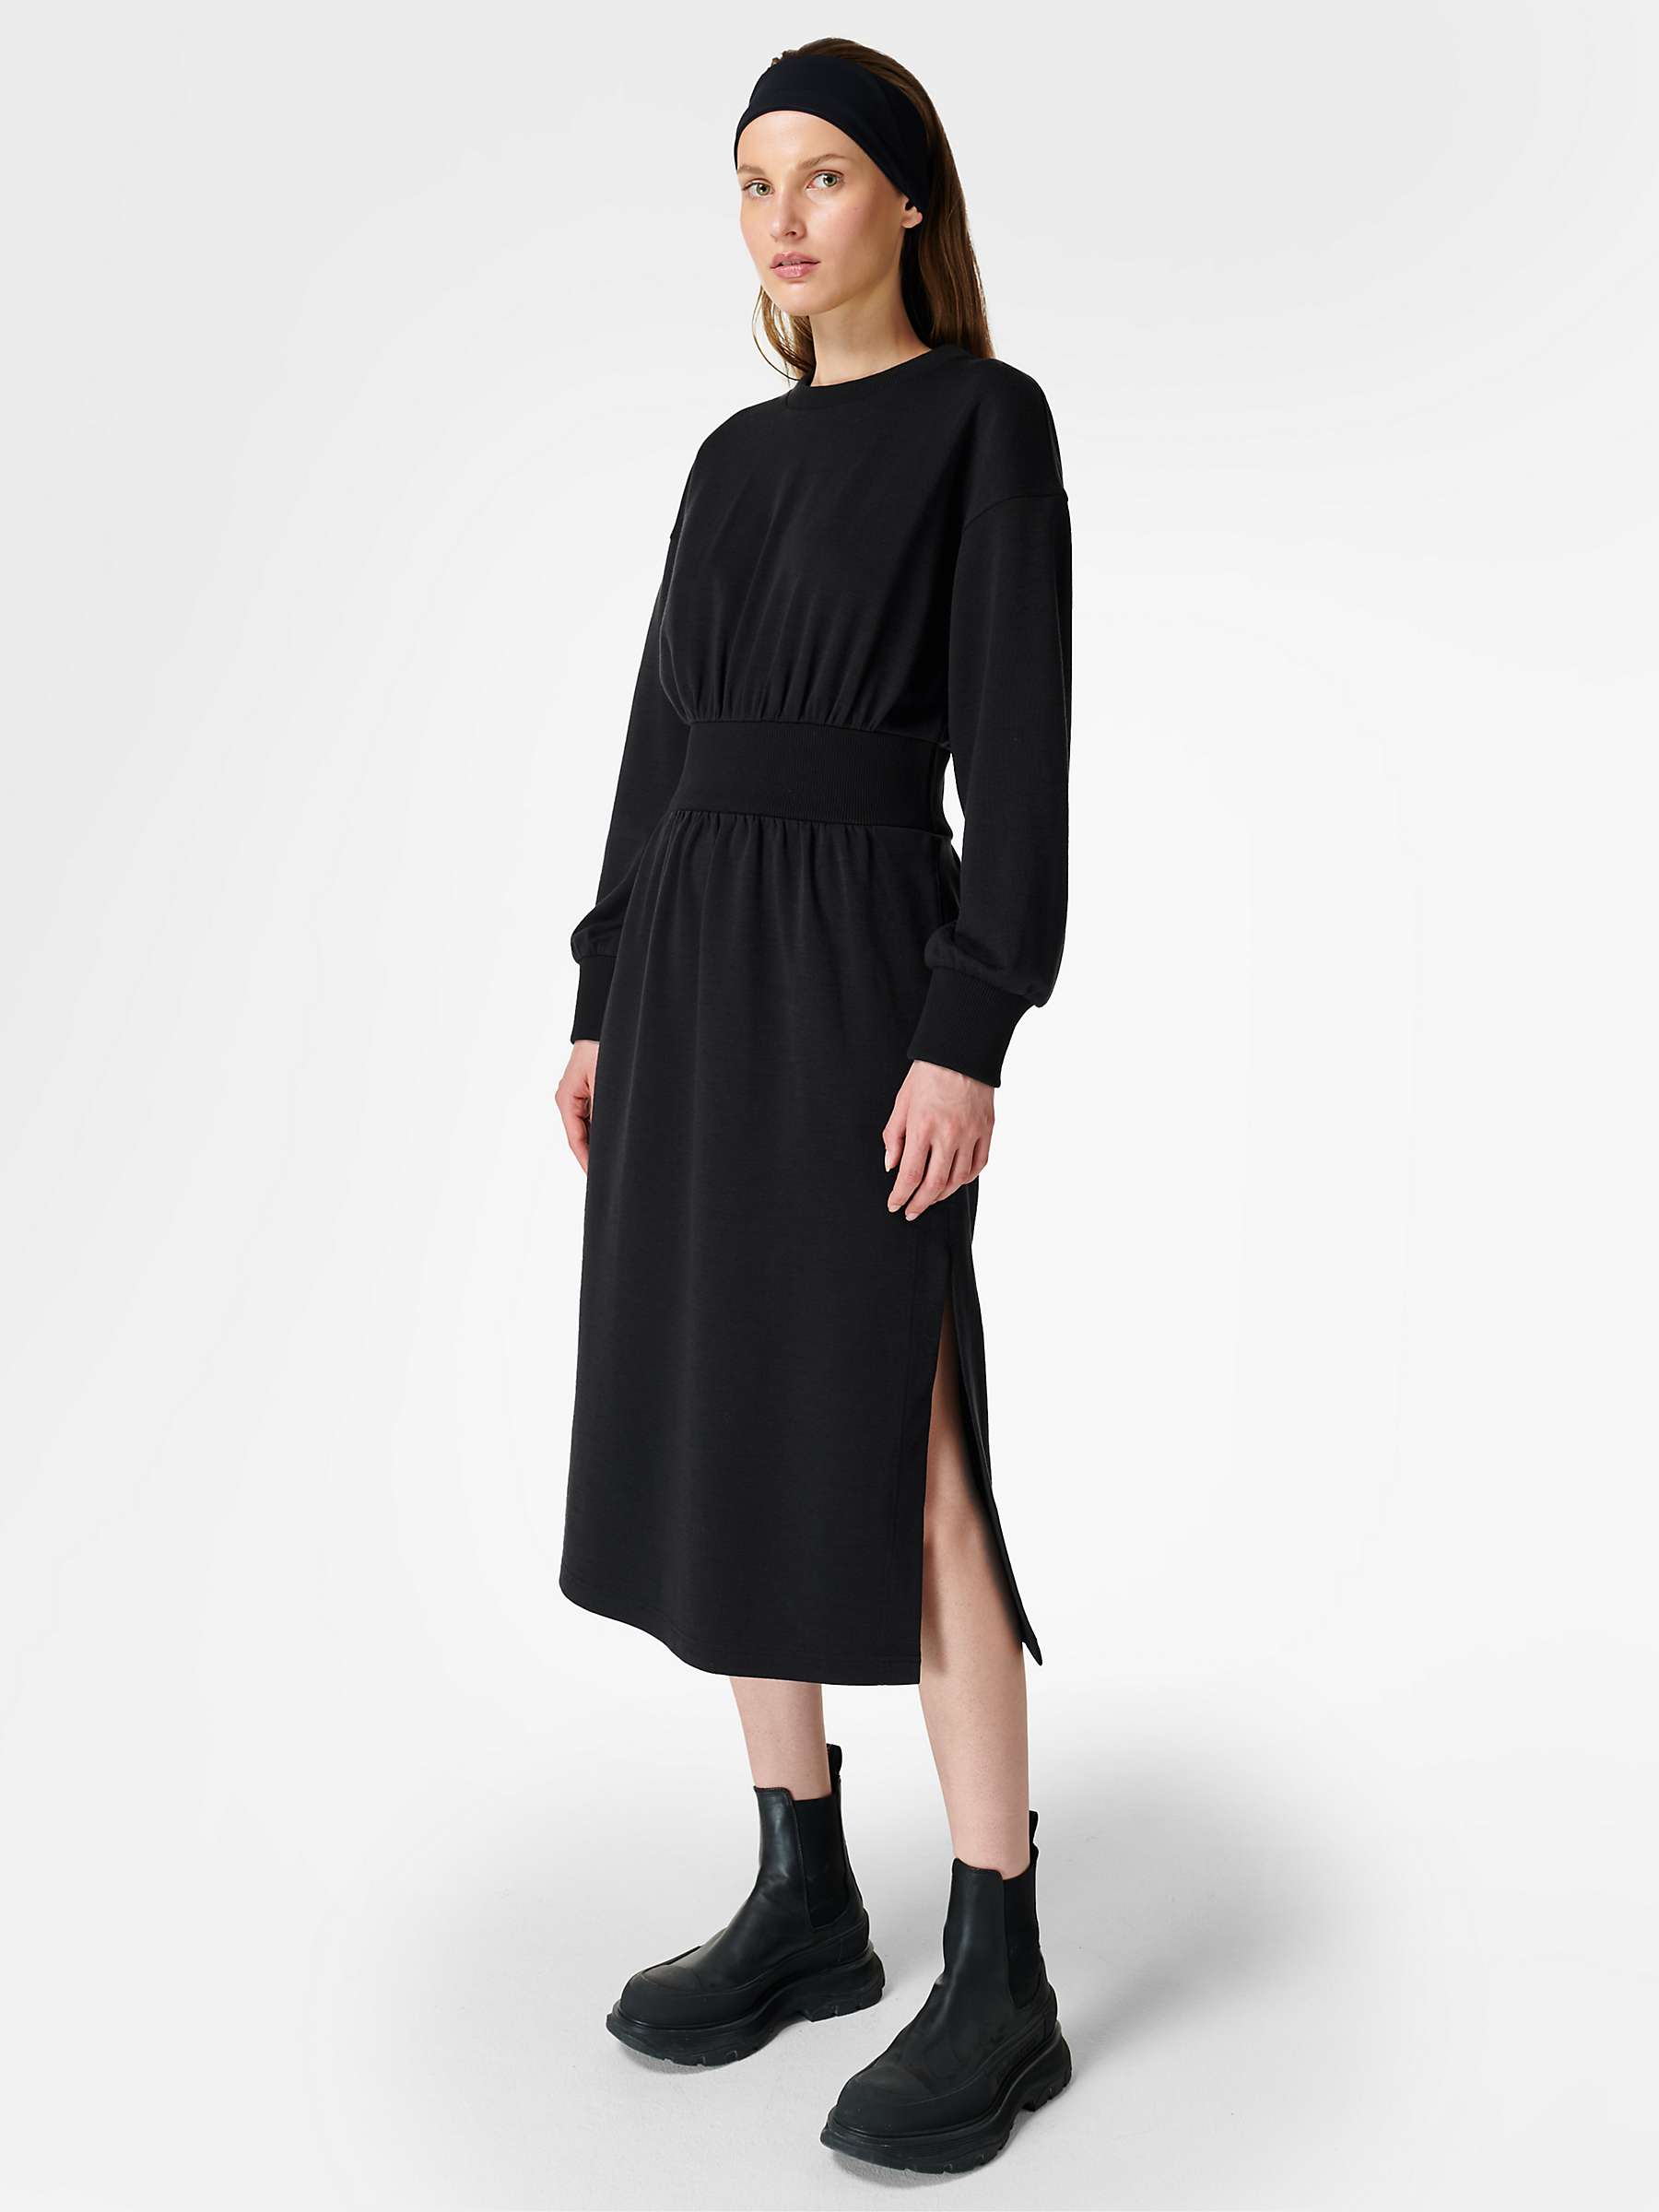 Sweaty Betty Verse Wool Blend Midi Dress, Black at John Lewis & Partners